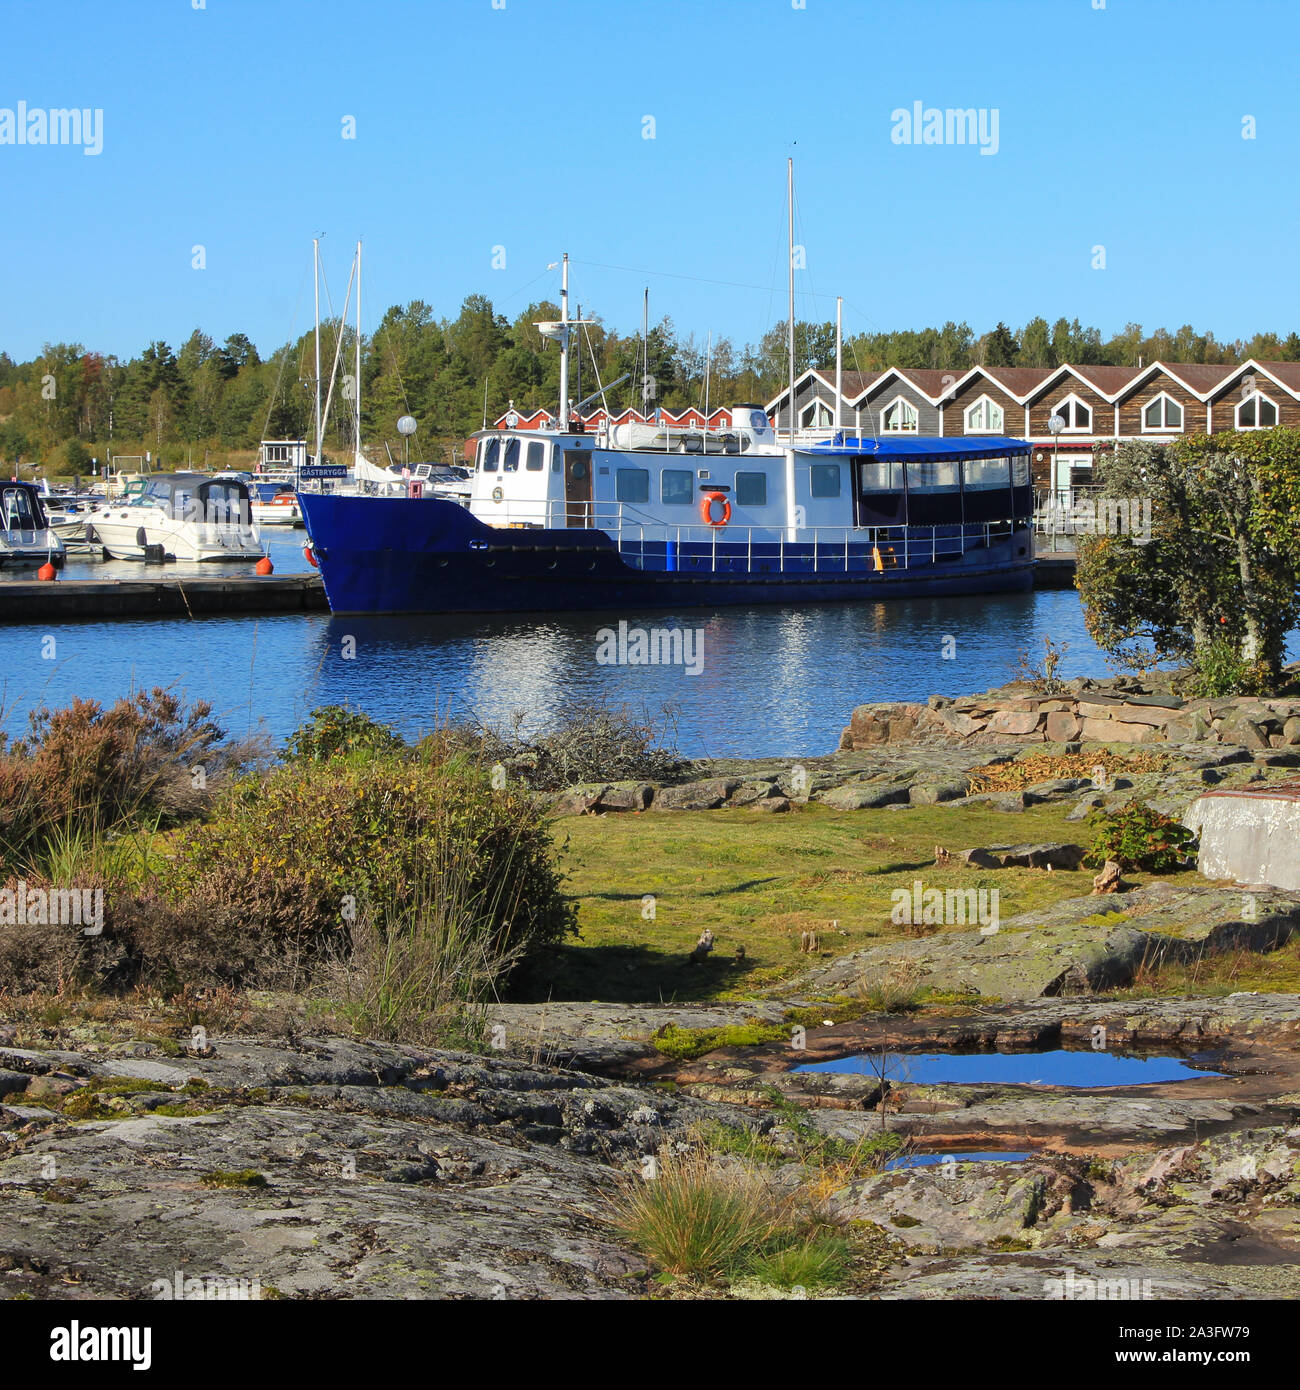 Ship in Sunnanå Hamn, small harbour in Mellerud. Dalsland, Sweden. Stock Photo